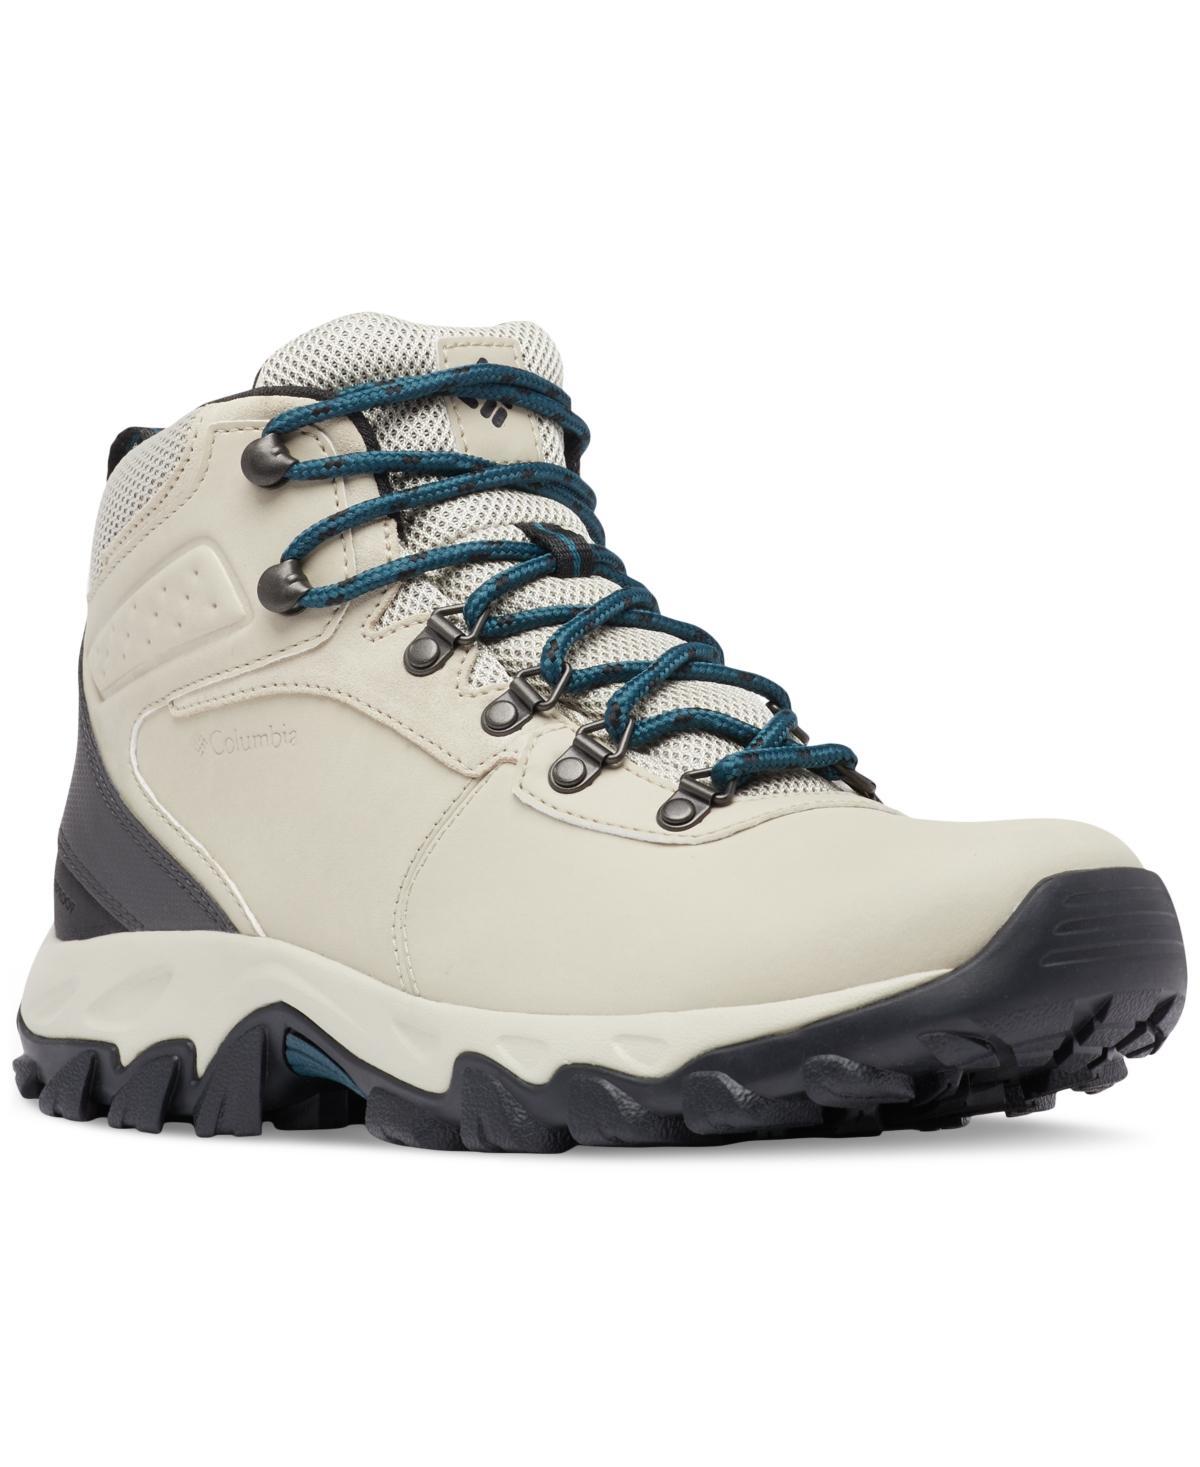 Columbia Newton Ridge Plus II Waterproof Mens Hiking Boots Beige Product Image